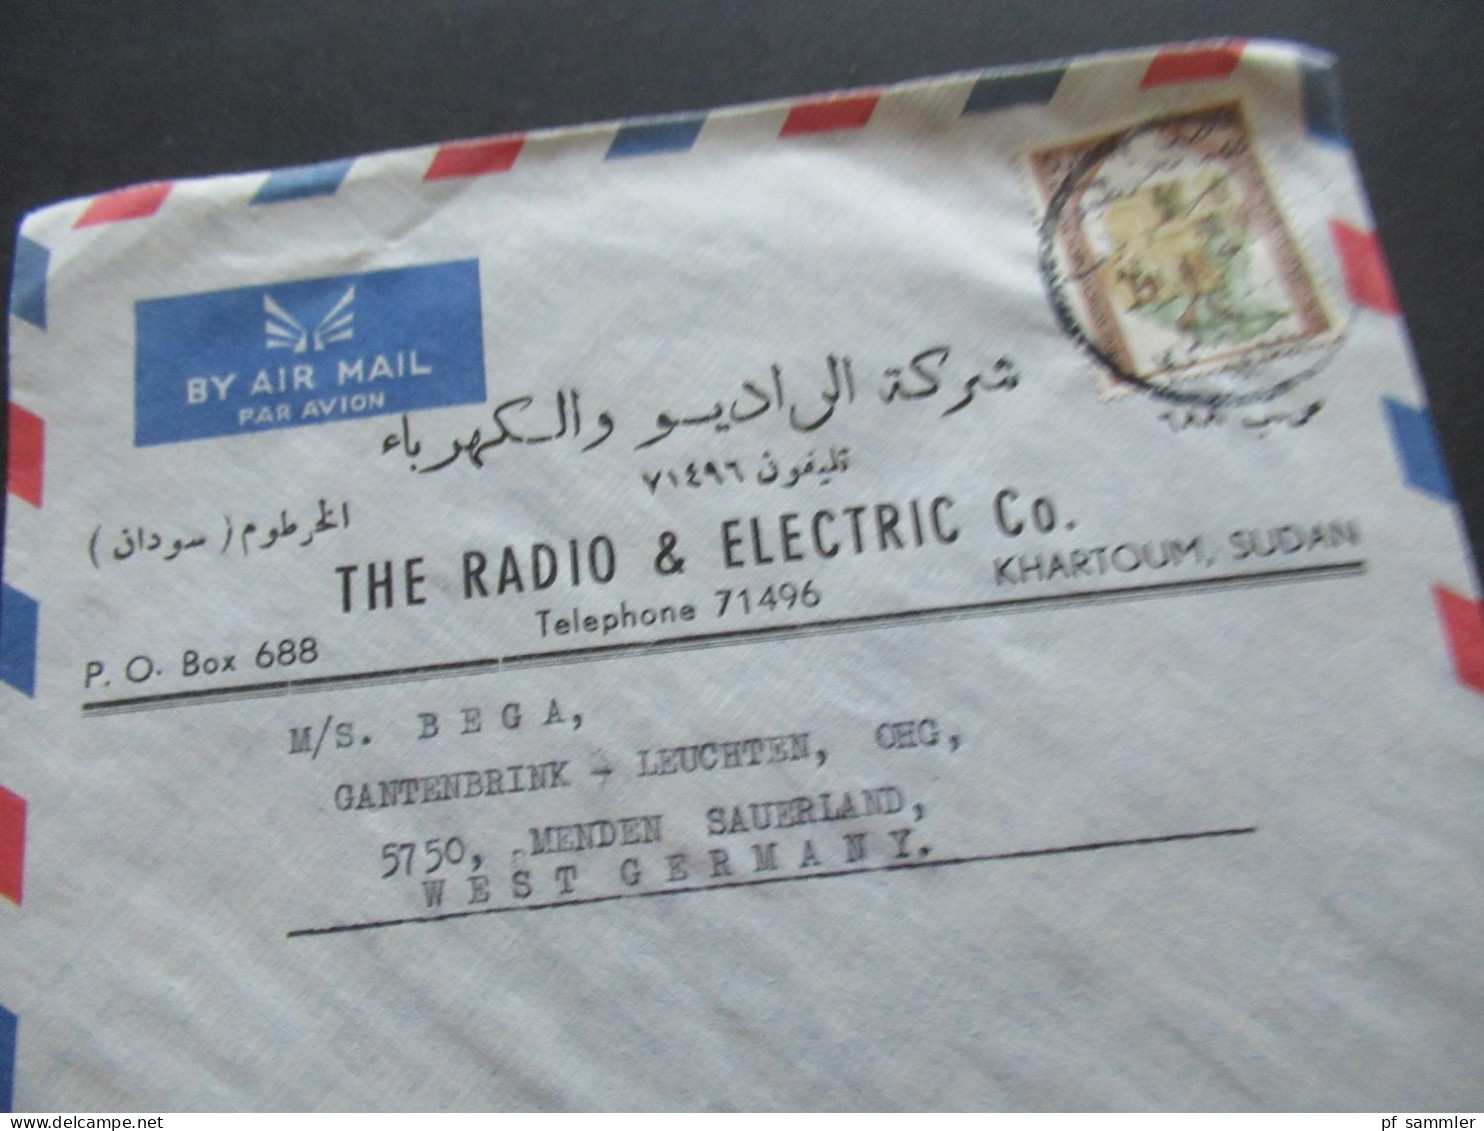 Afrika Sudan 1966 Air Mail Cover Stempel Khartoum Mails Sudan Umschlag The Radio & Electric Co Khartoum Sudan - Soedan (1954-...)